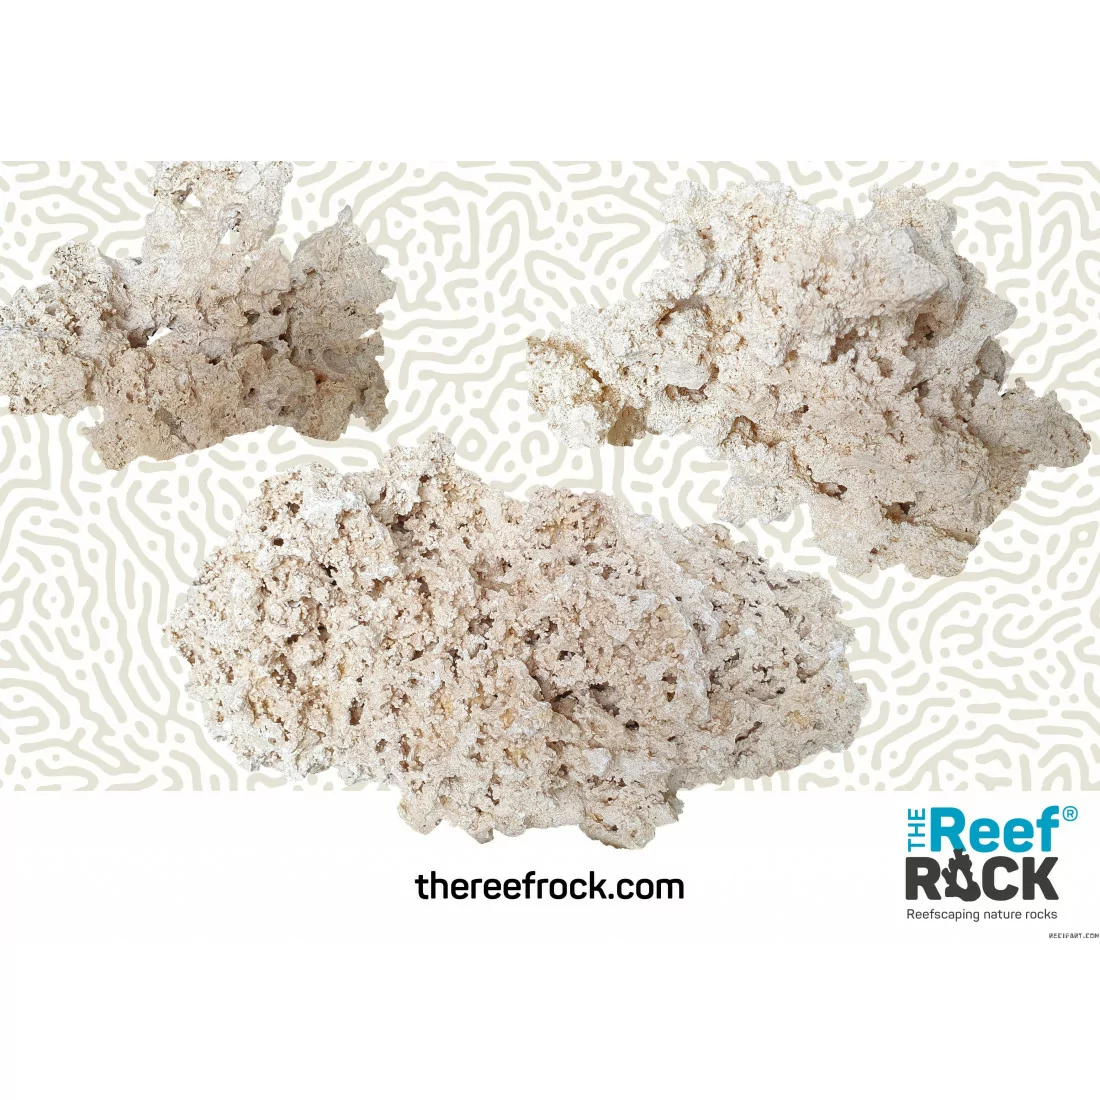 Natural rocks "The reef Rock" (20kg) - Size L